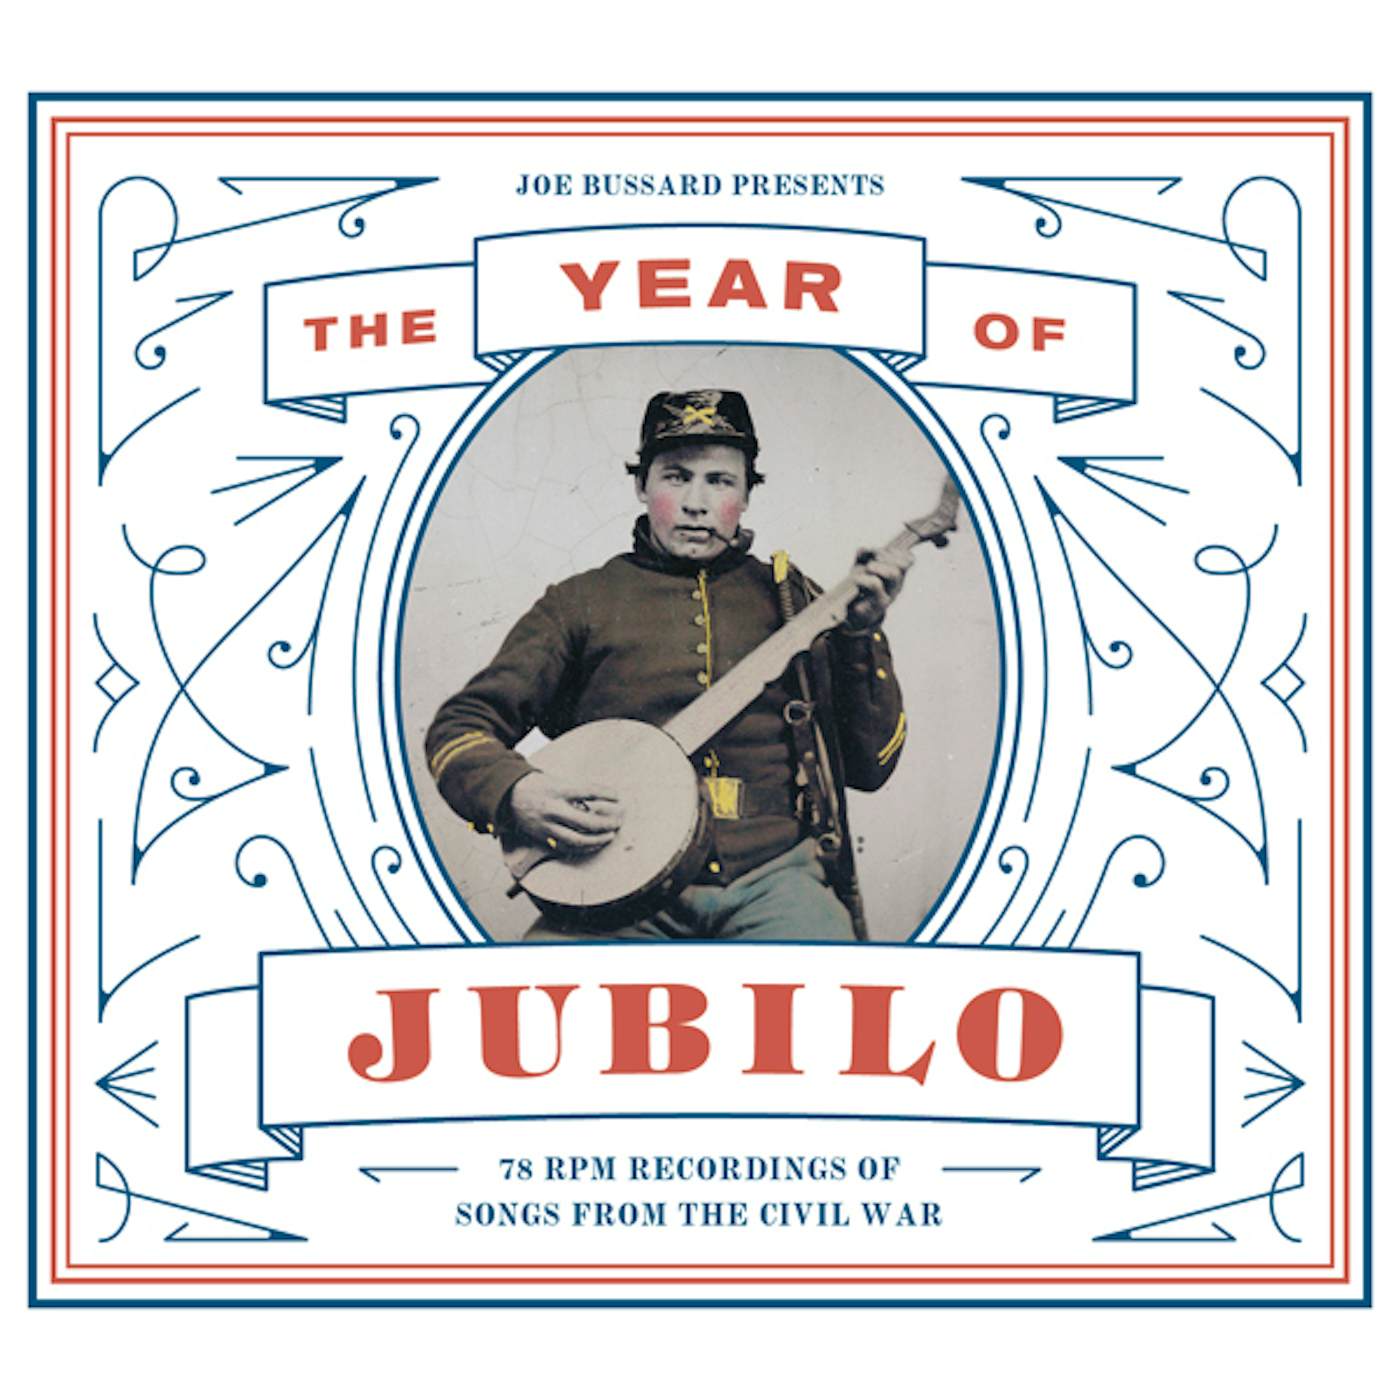 JOE BUSSARD PRESENTS: THE YEAR OF JUBILO - 78 RPM CD